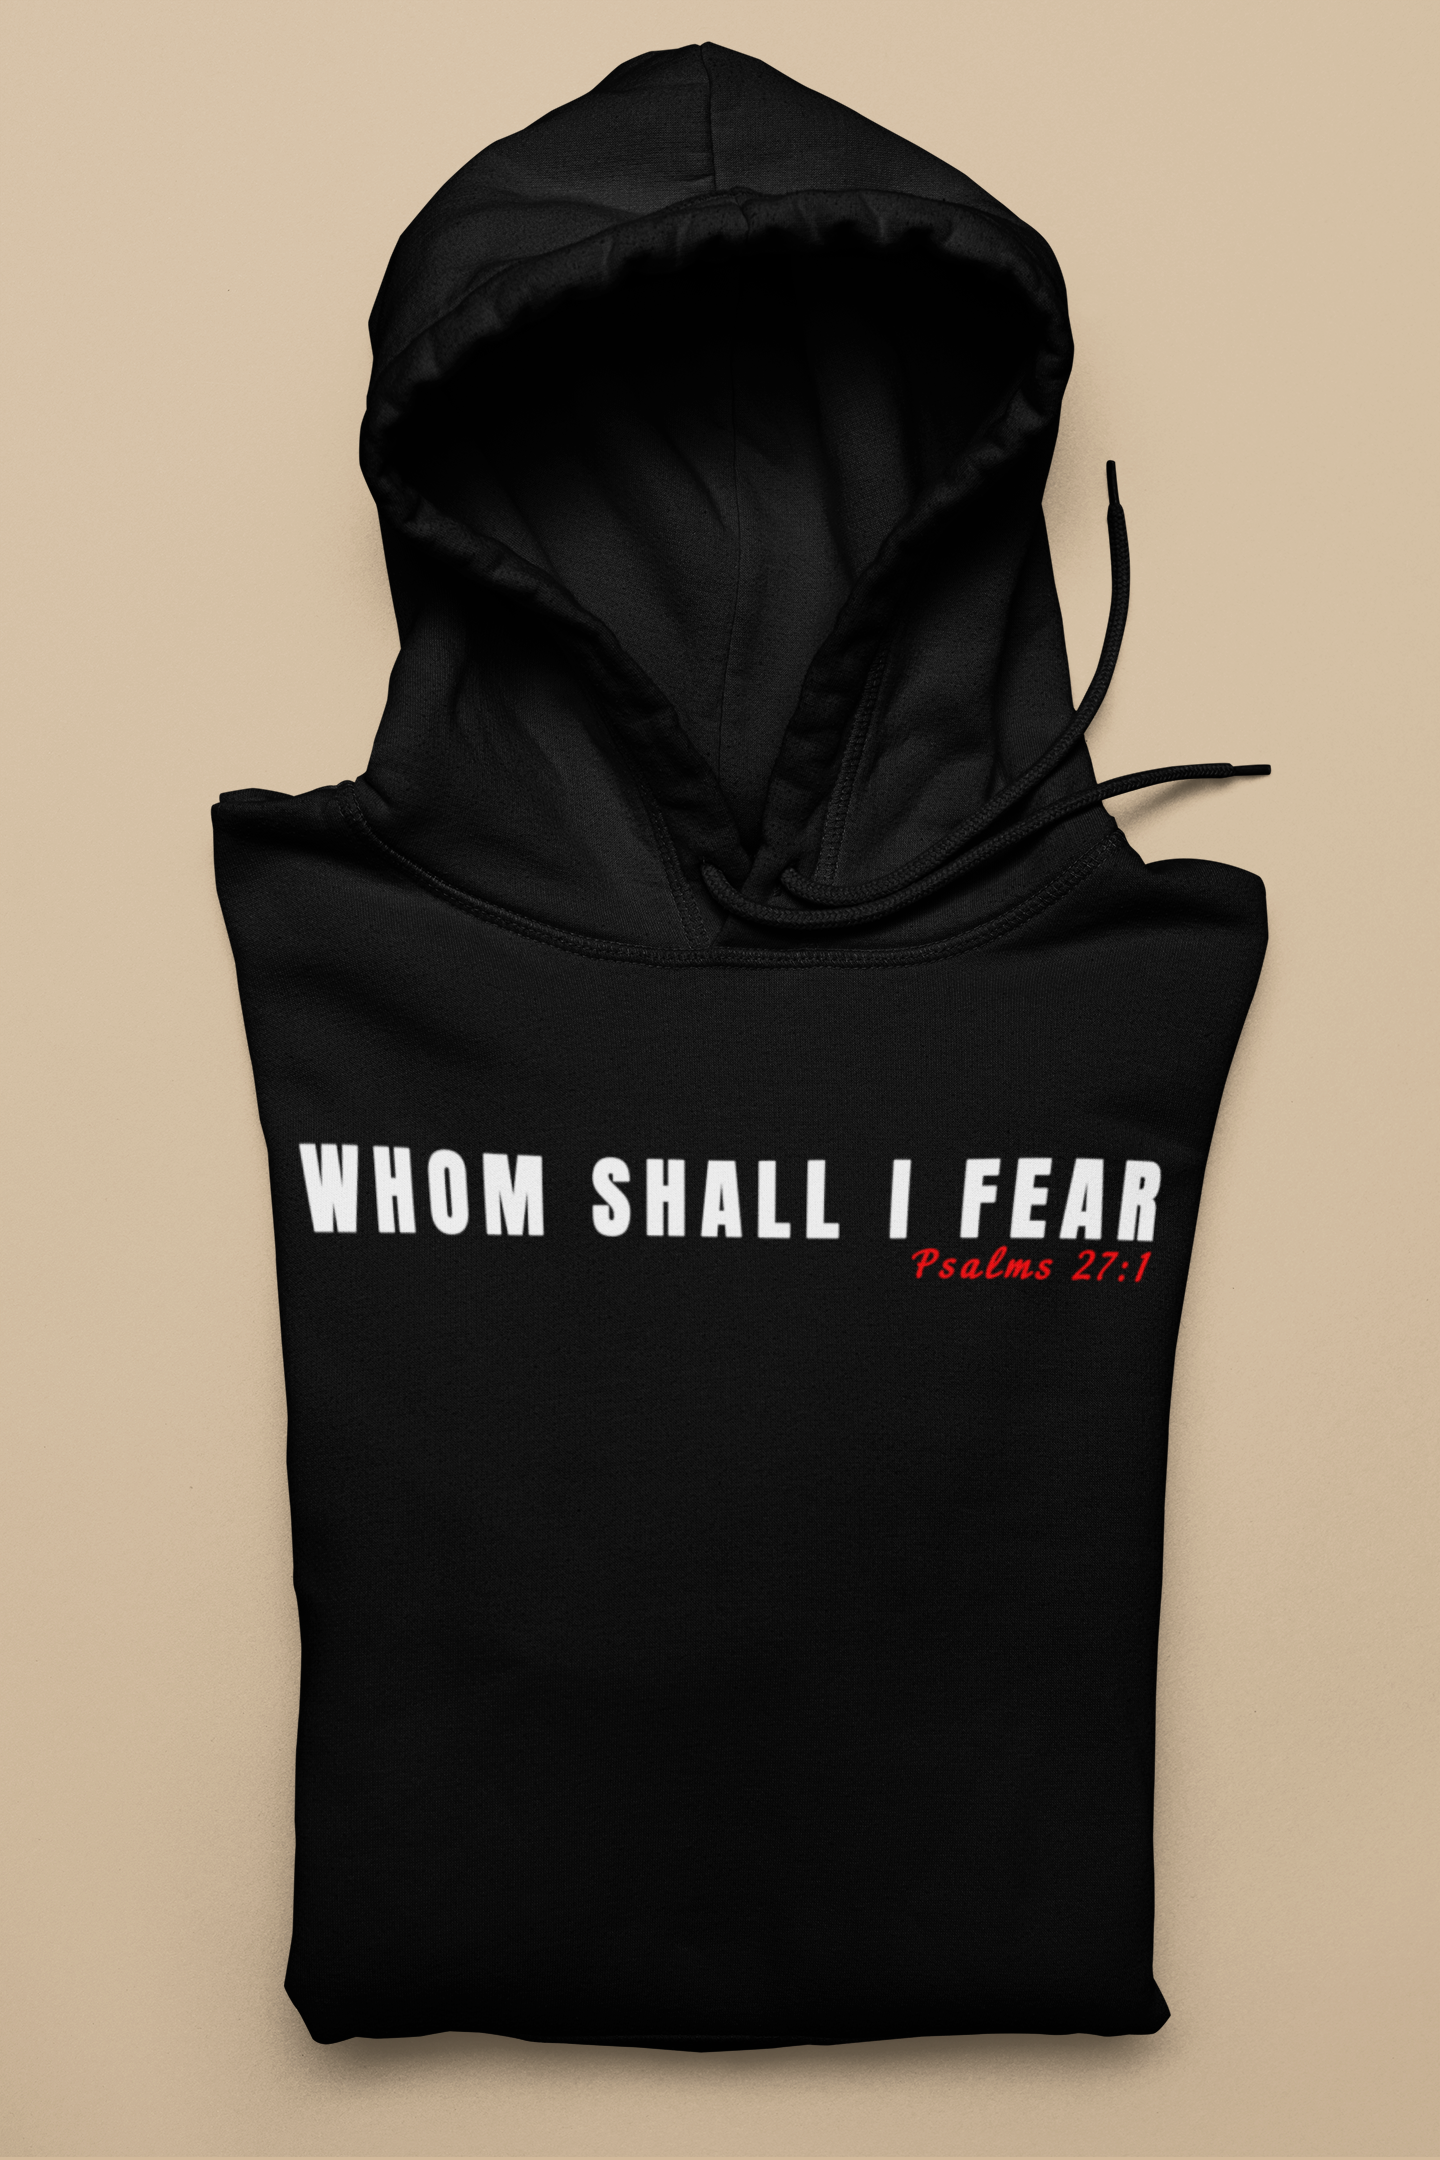 Whom Shall I fear T-shirt/Hoodie Typography